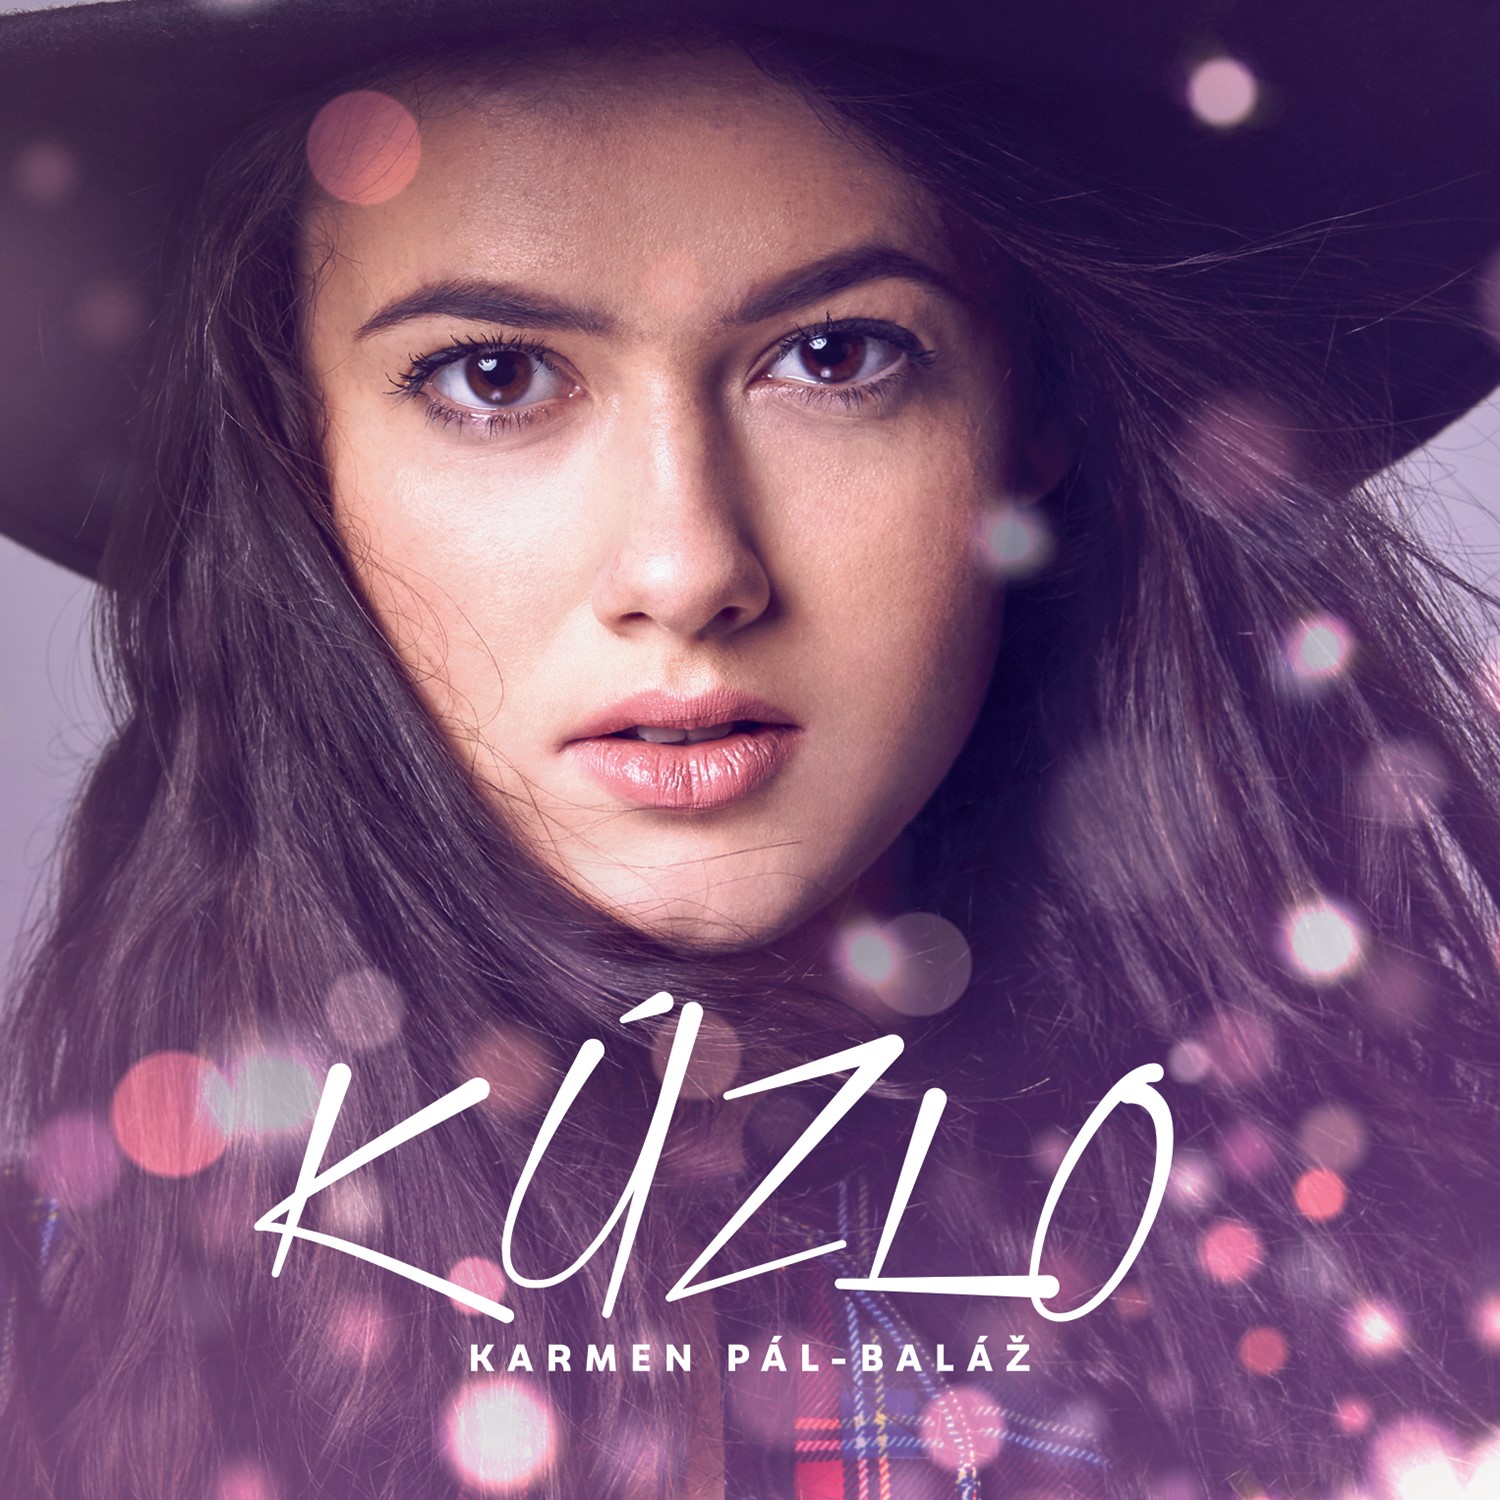 CD Shop - KARMEN PAL BALAZ KUZLO